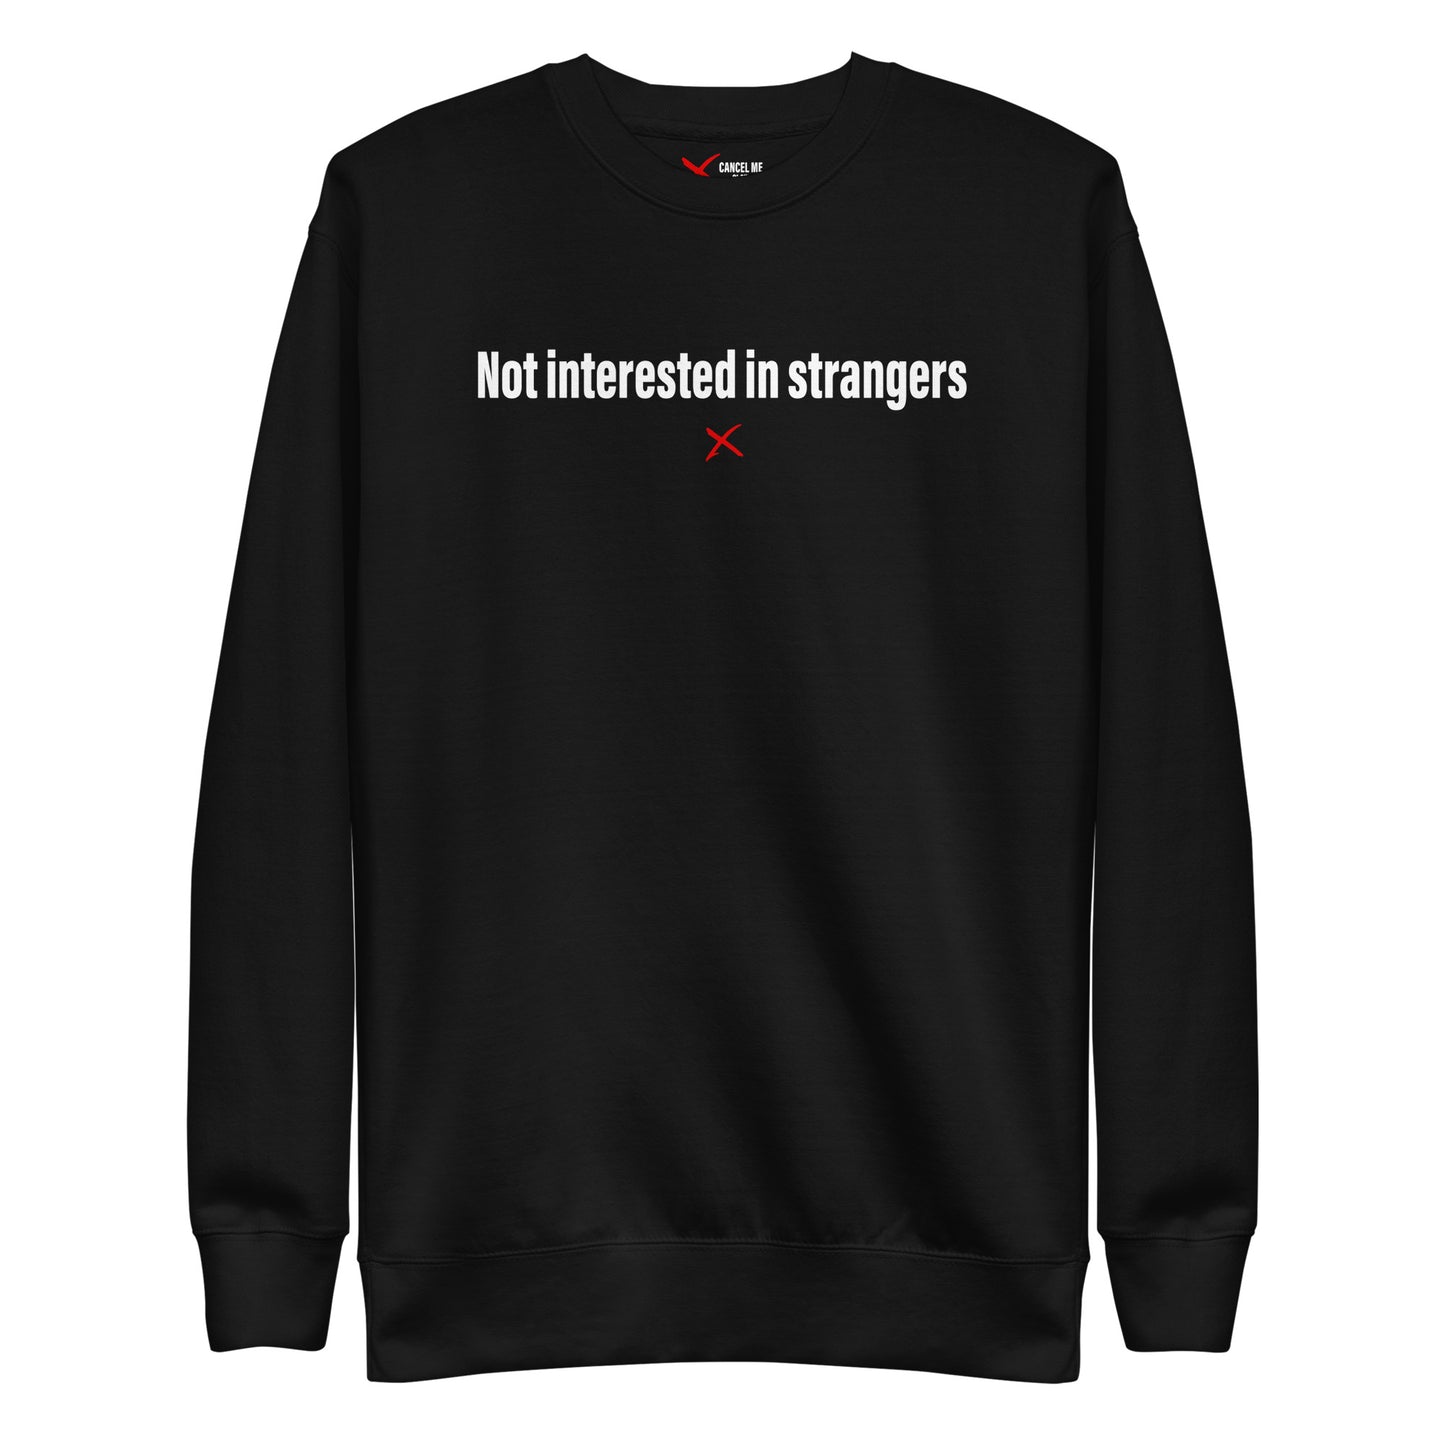 Not interested in strangers - Sweatshirt